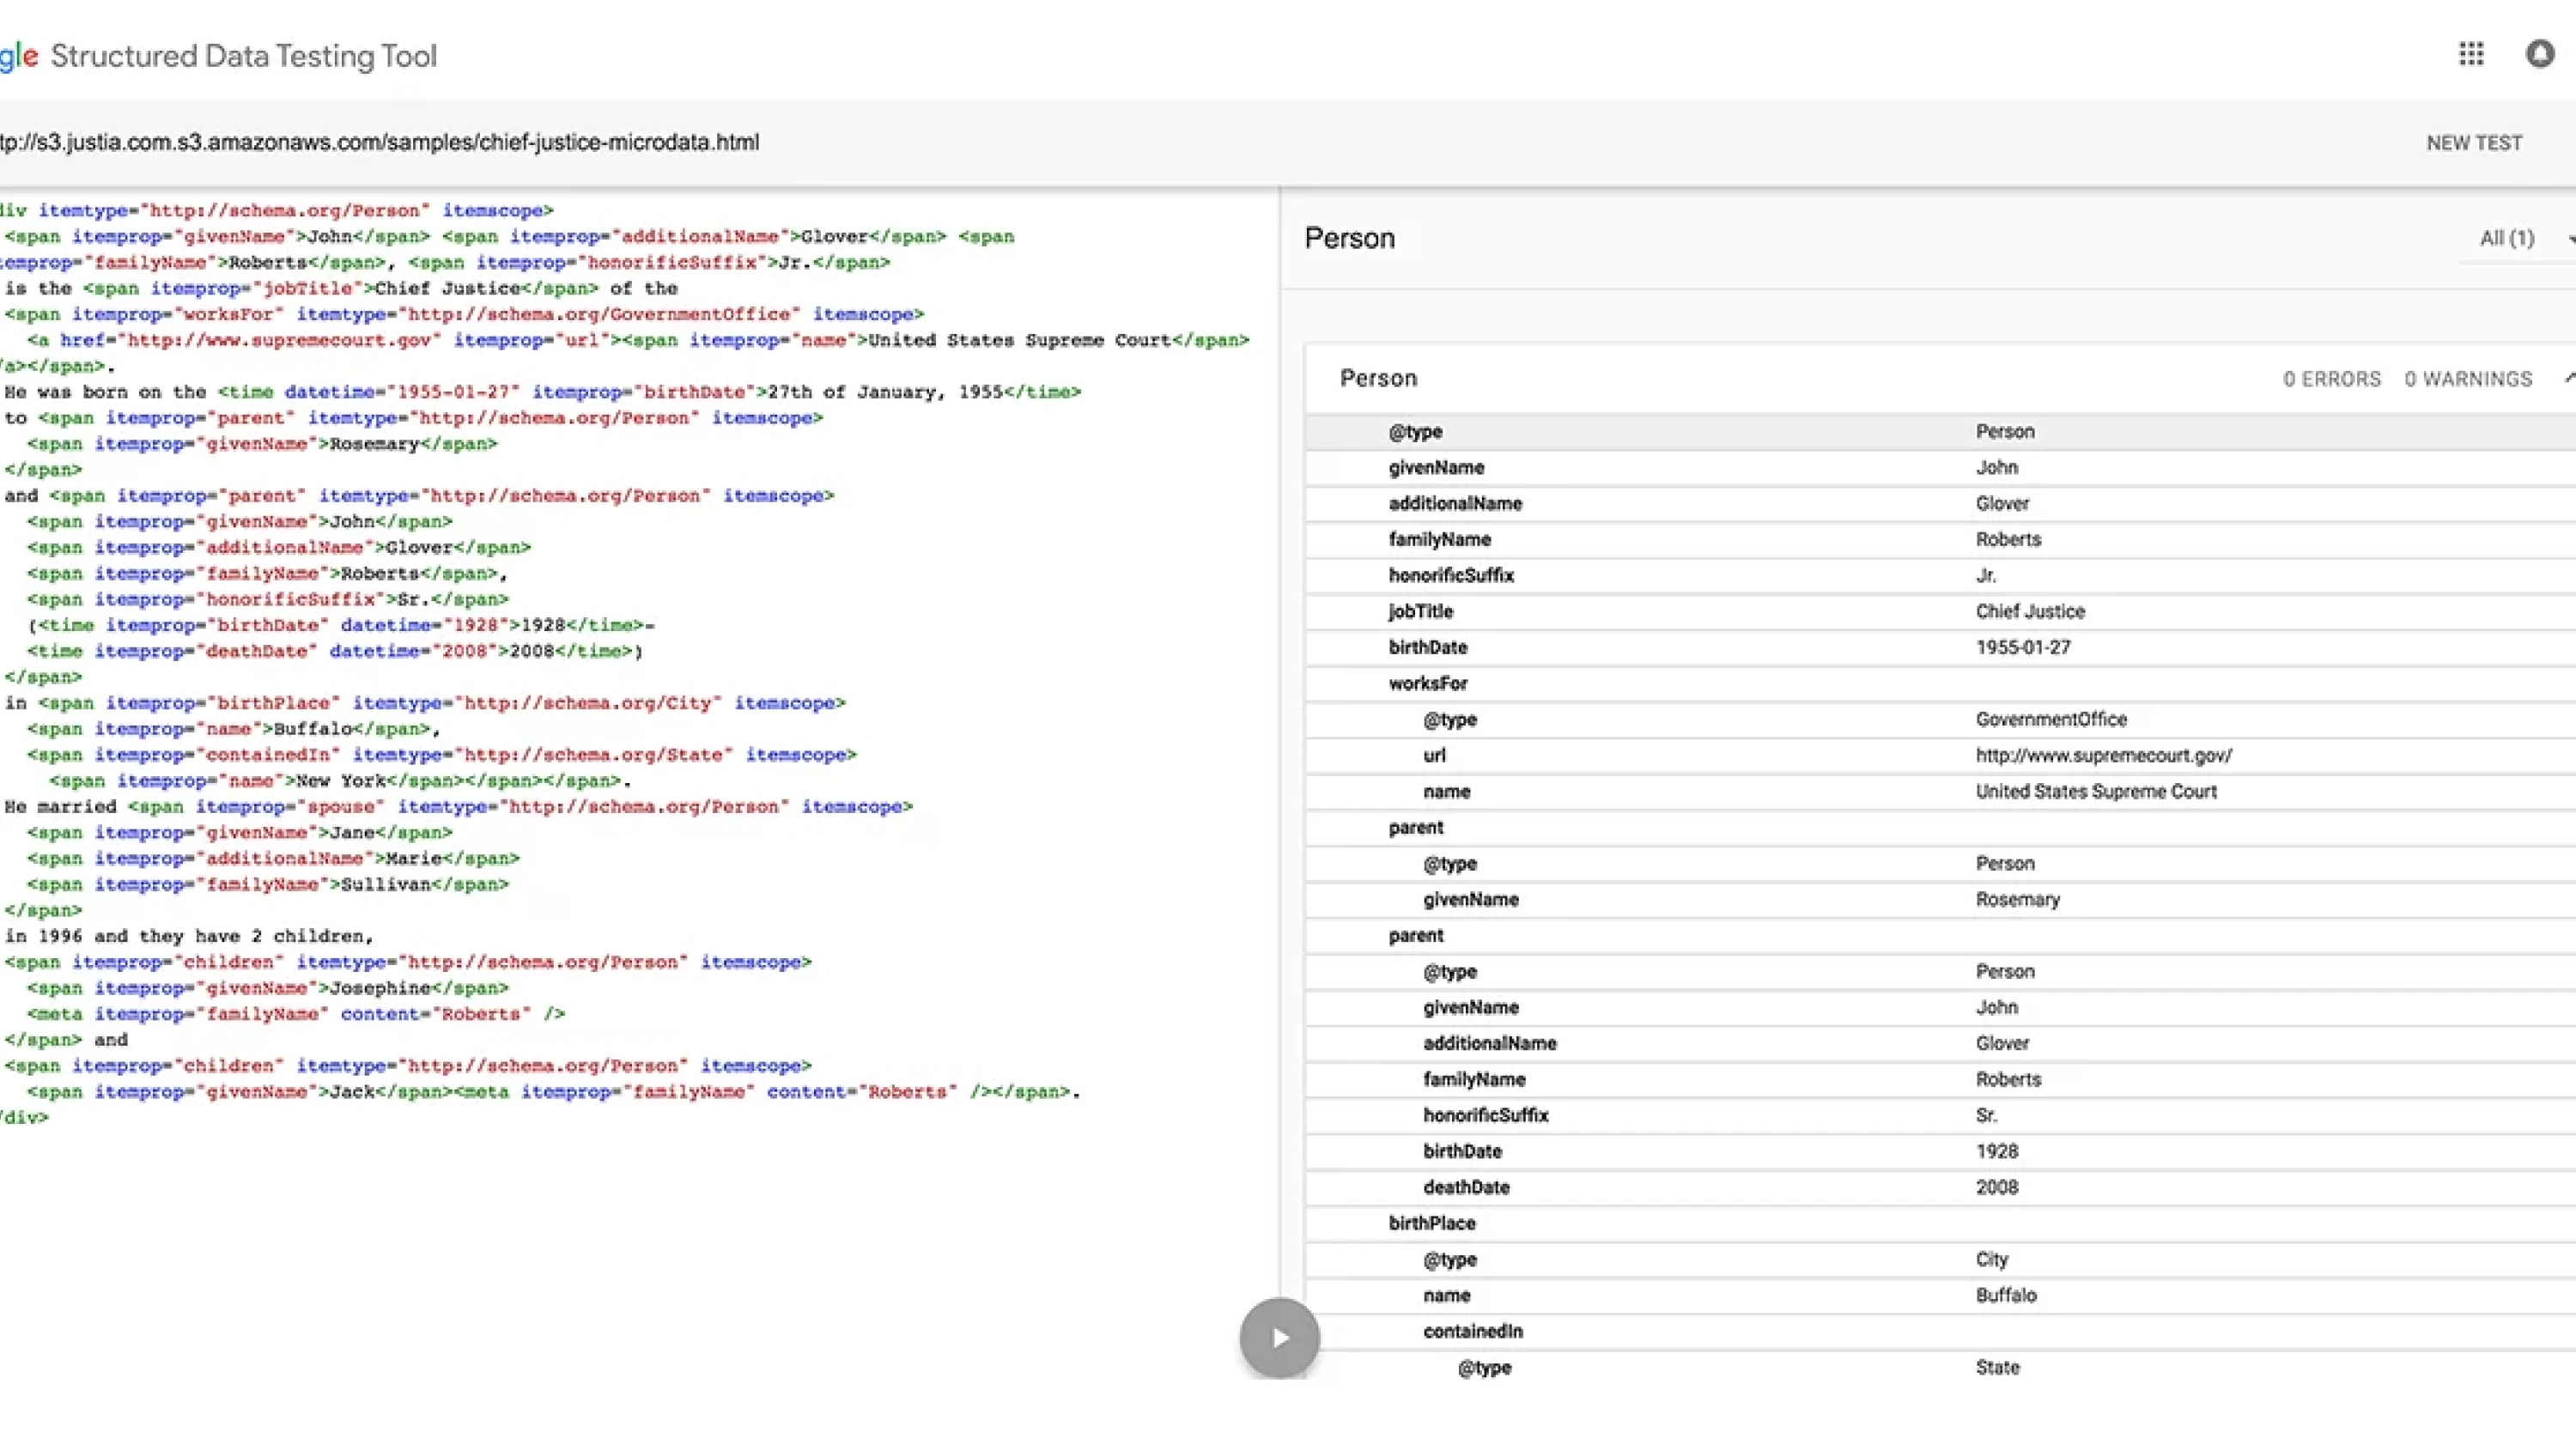 Screenshot of the Google Structured Data Testing Tool